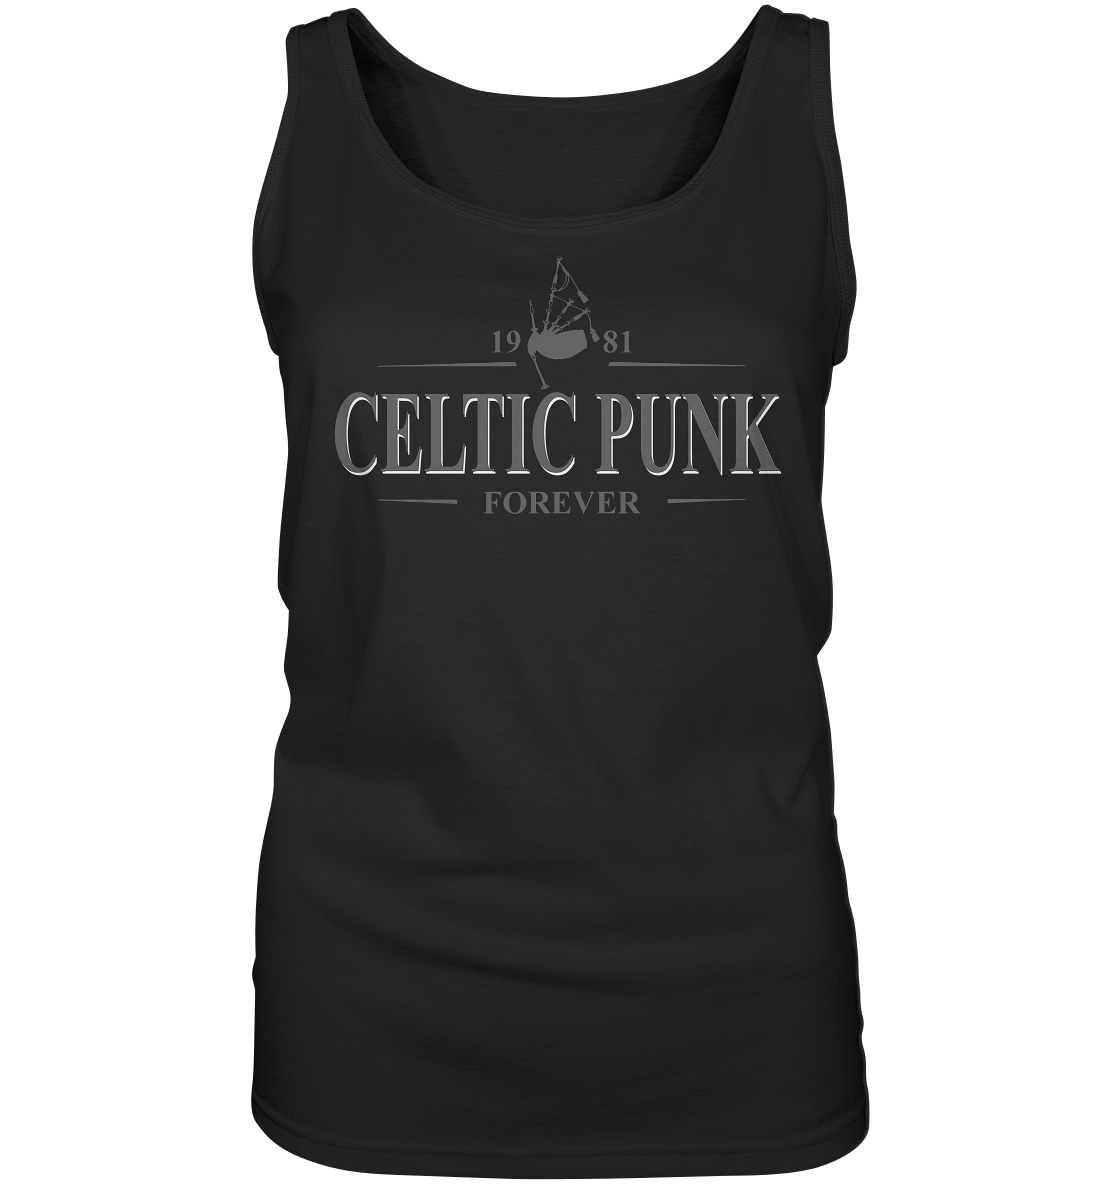 Celtic Punk "Forever" - Ladies Tank-Top